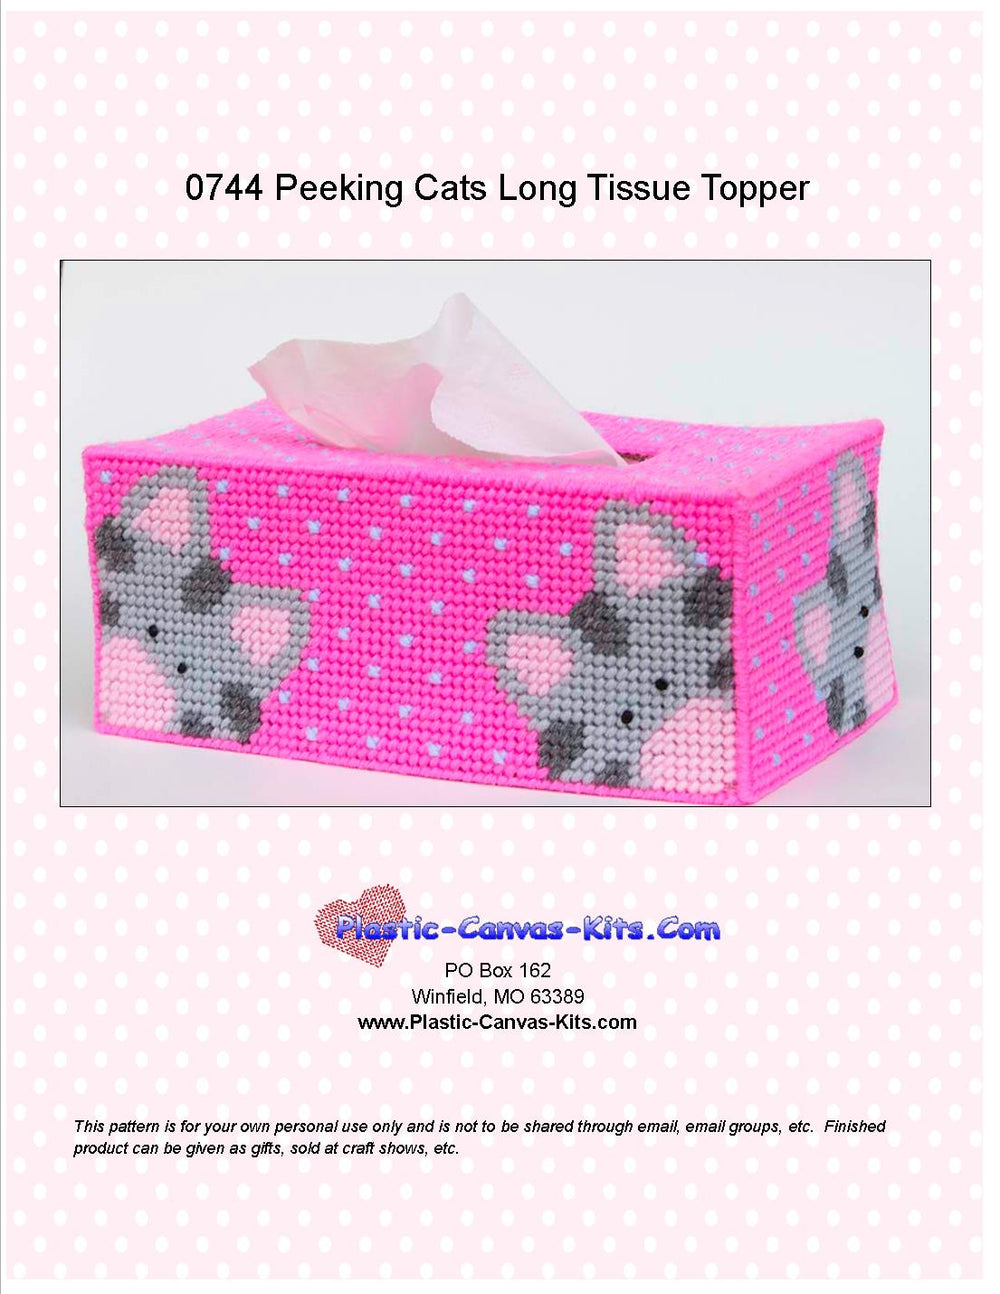 Peeking Cats Long Tissue Topper